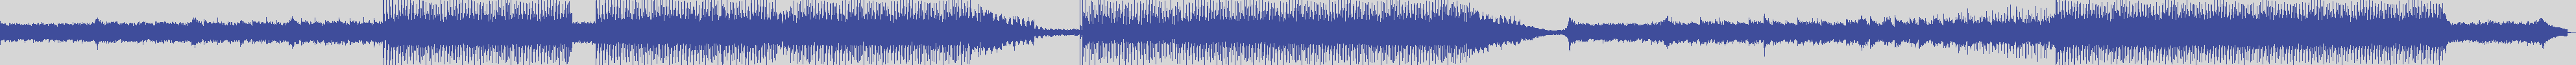 atomic_recordings [AR008] DB Boulevard - Frequency [Original Club Mix] audio wave form